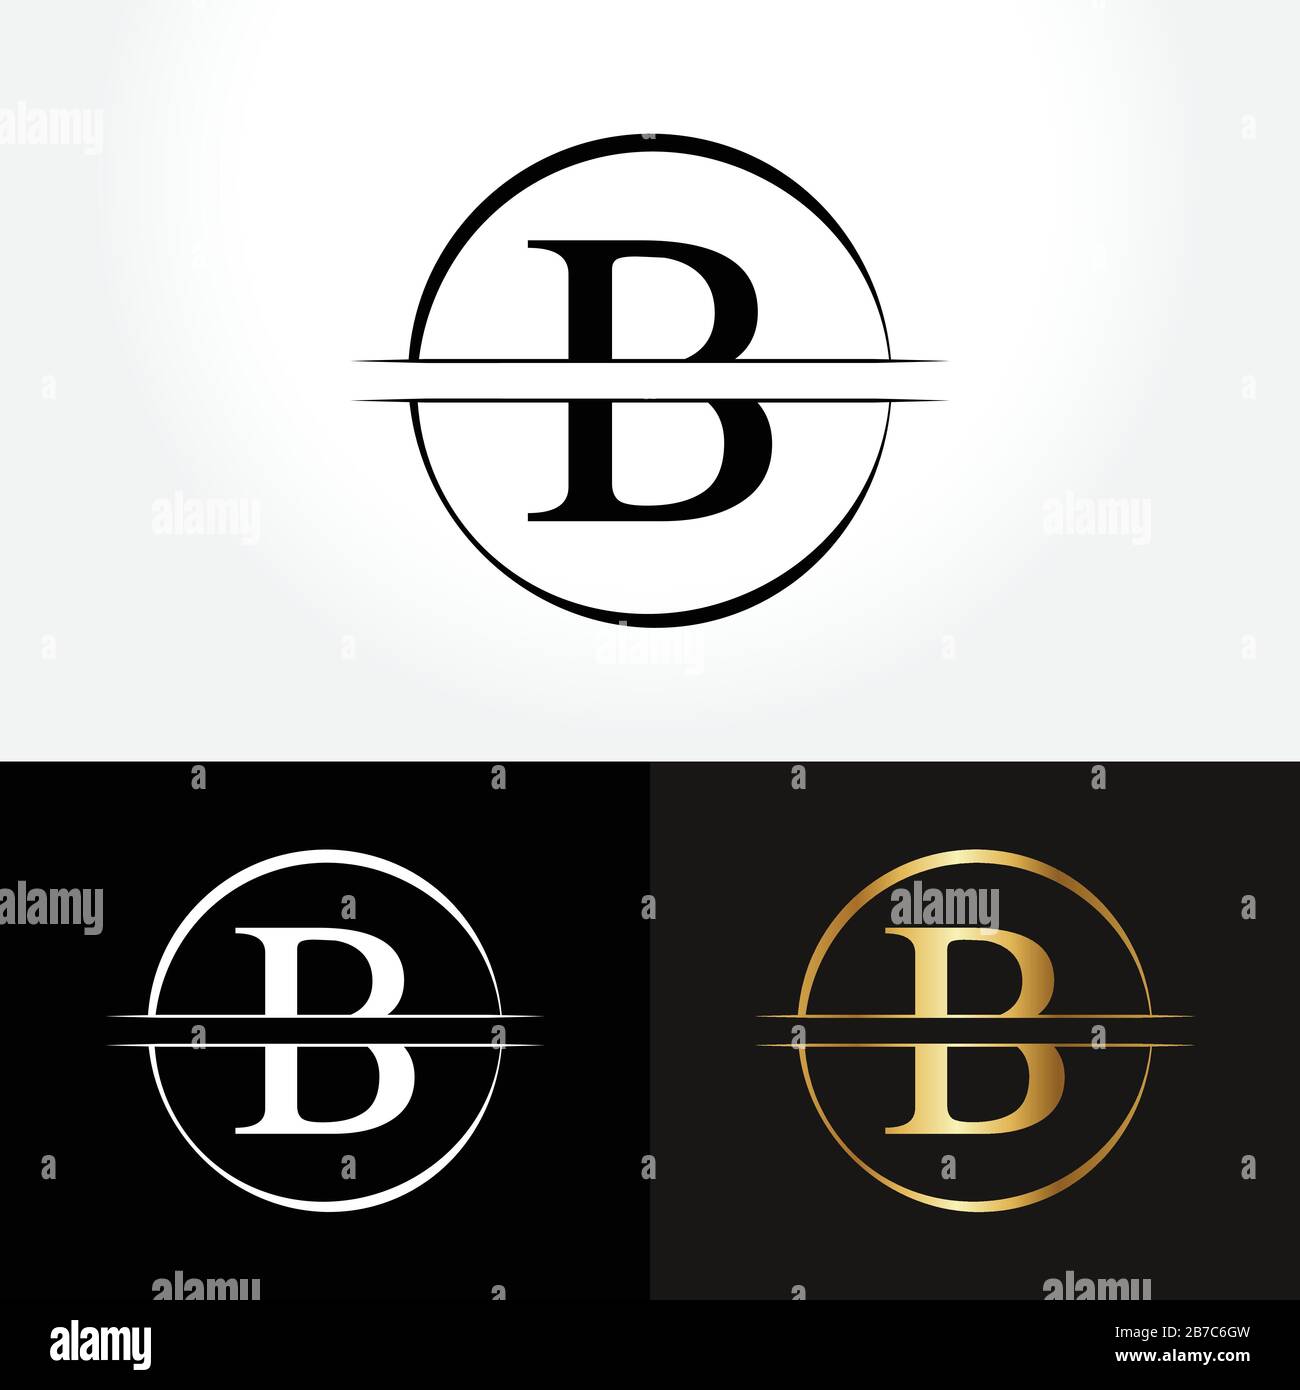 circles logo design